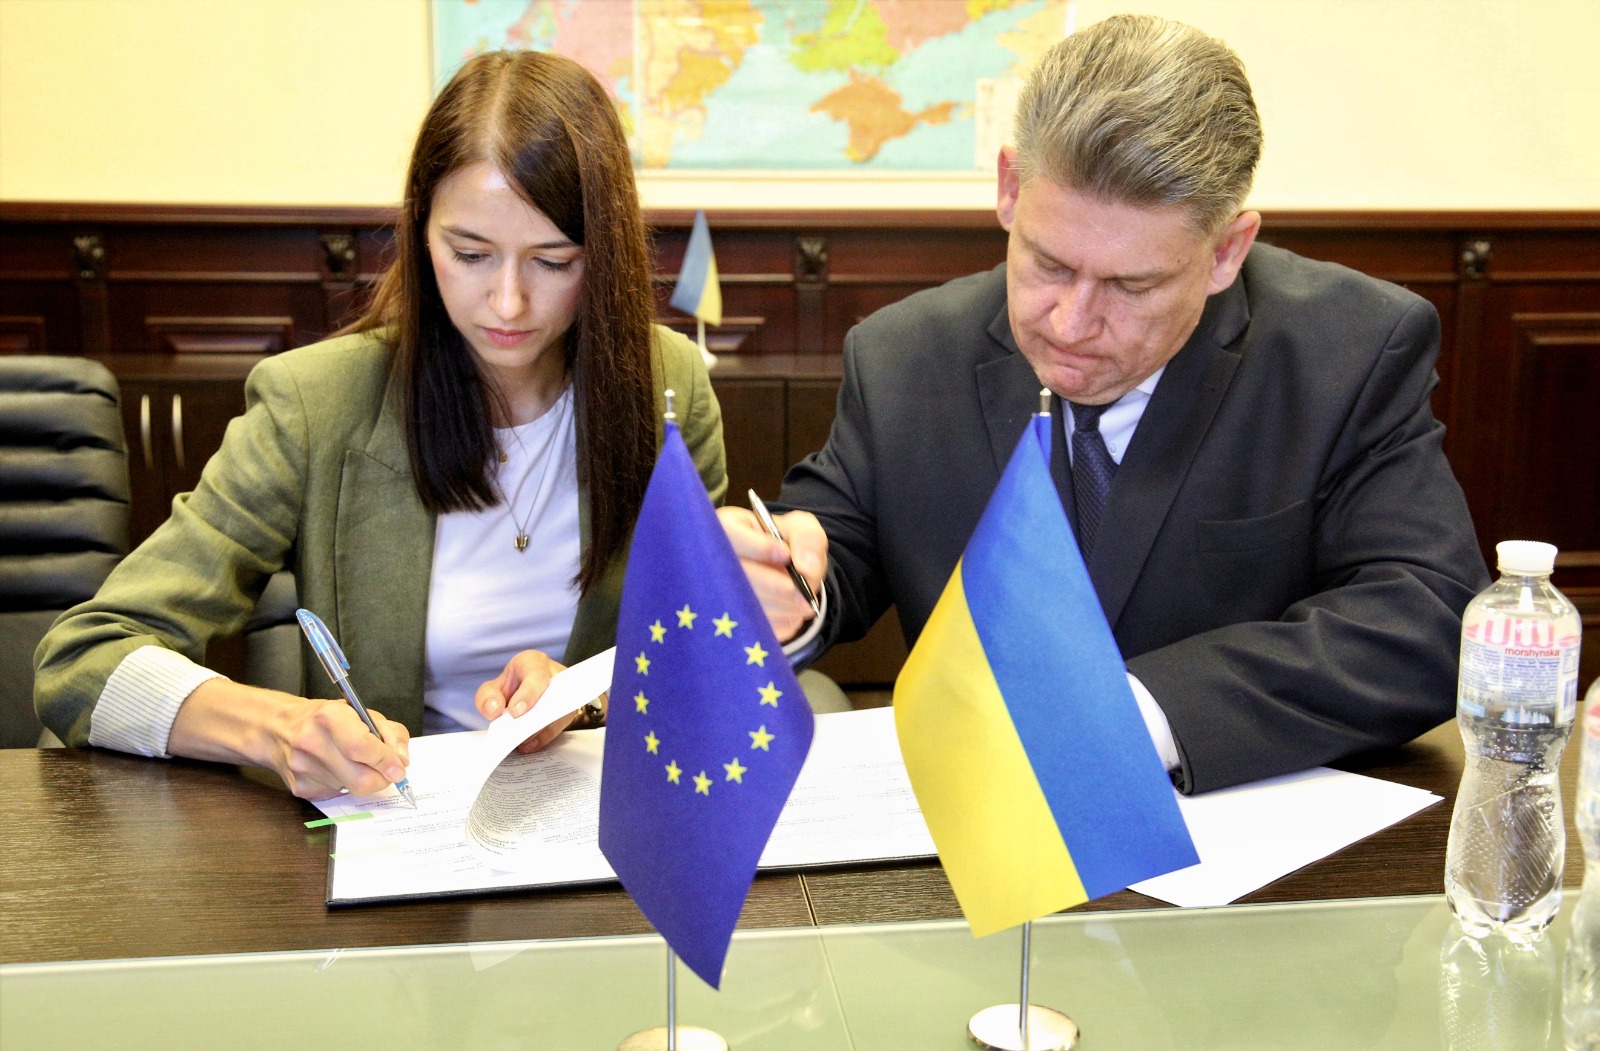 EU Project Pravo-Justice and the HQCJ signed a Memorandum of Cooperation